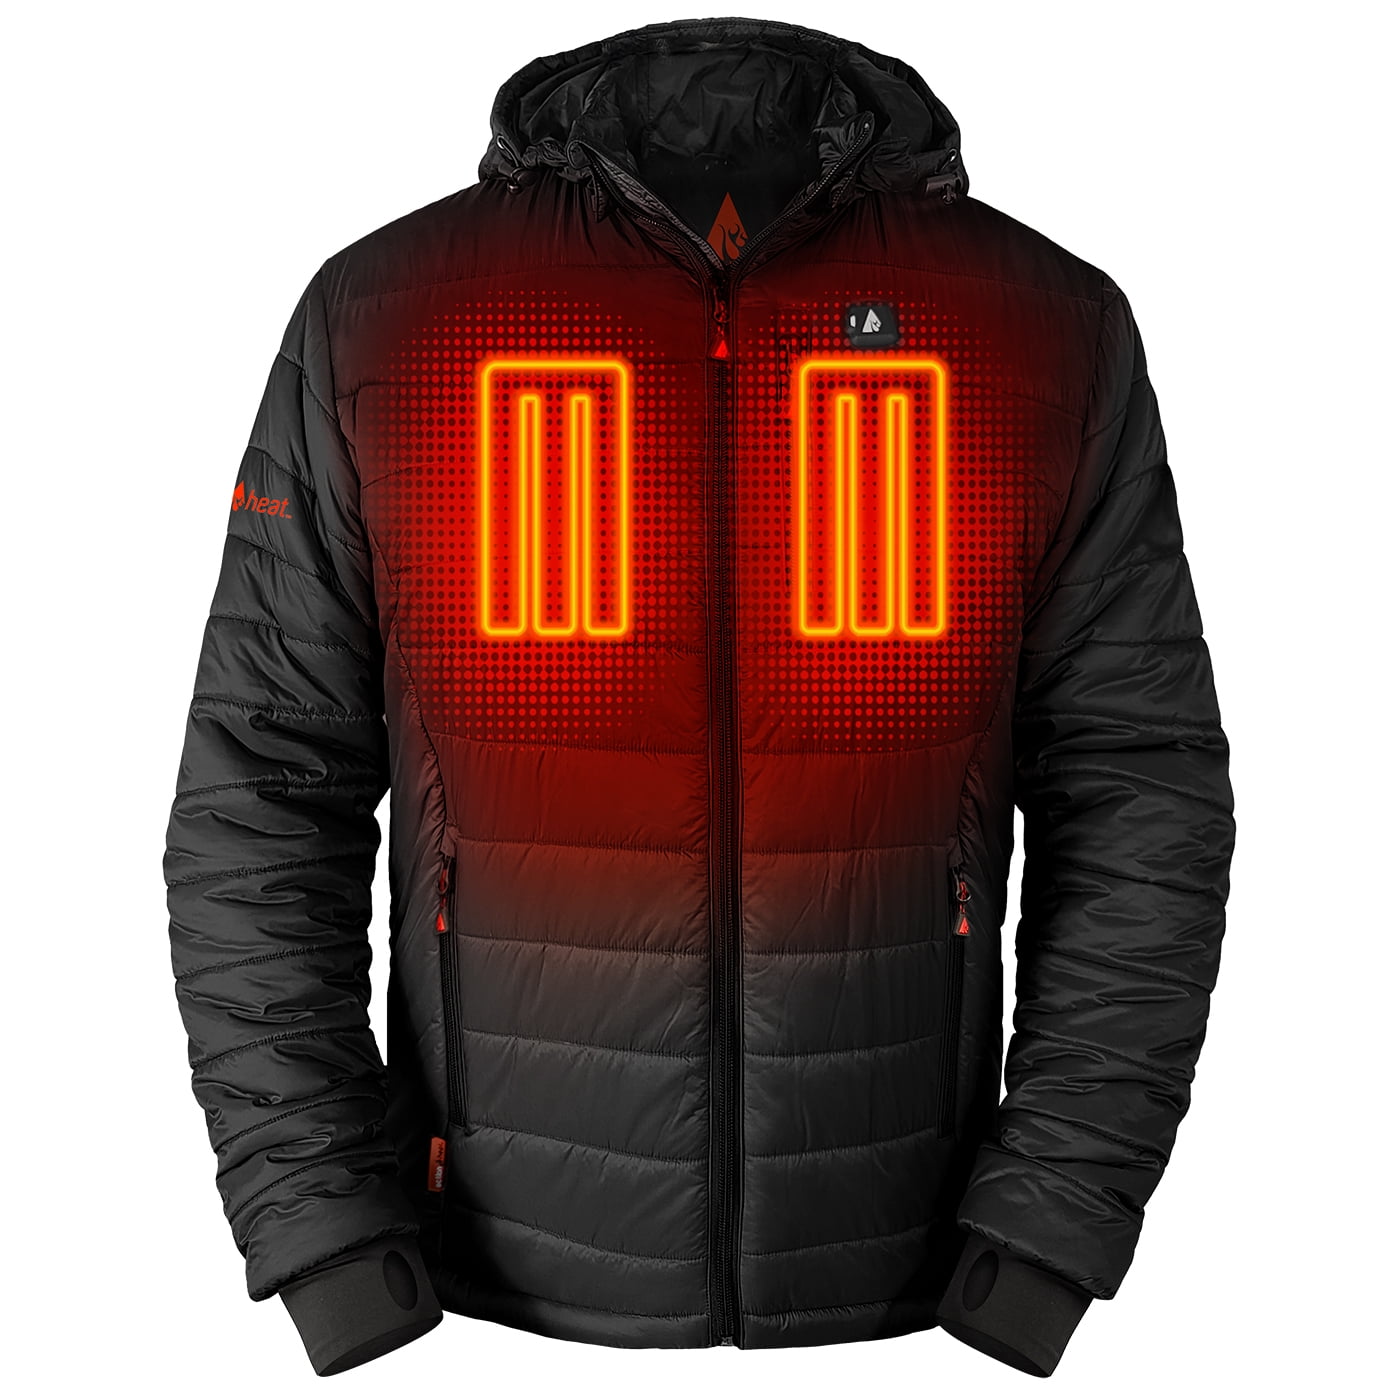 ActionHeat Men's 5V Battery Heated Puffer Jacket W/ Hood 